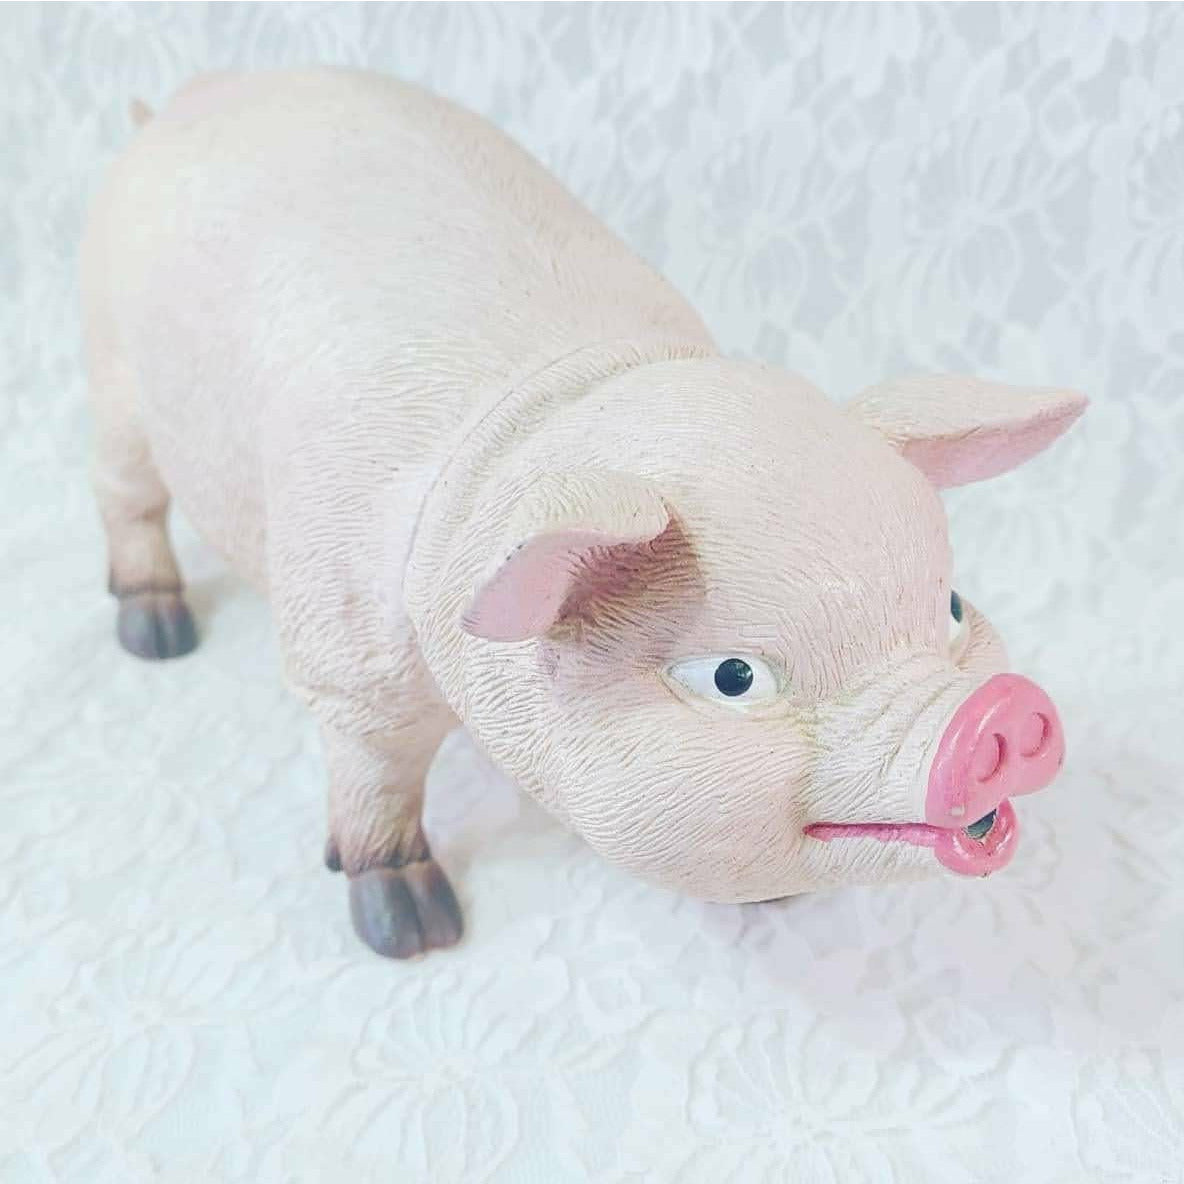 MOTION DETECTOR Kitschy Kitchen ~ Plastic Pig Piggy Piglet Figure Figurine Statue ~ Primitive ~ Rustic ~ Home